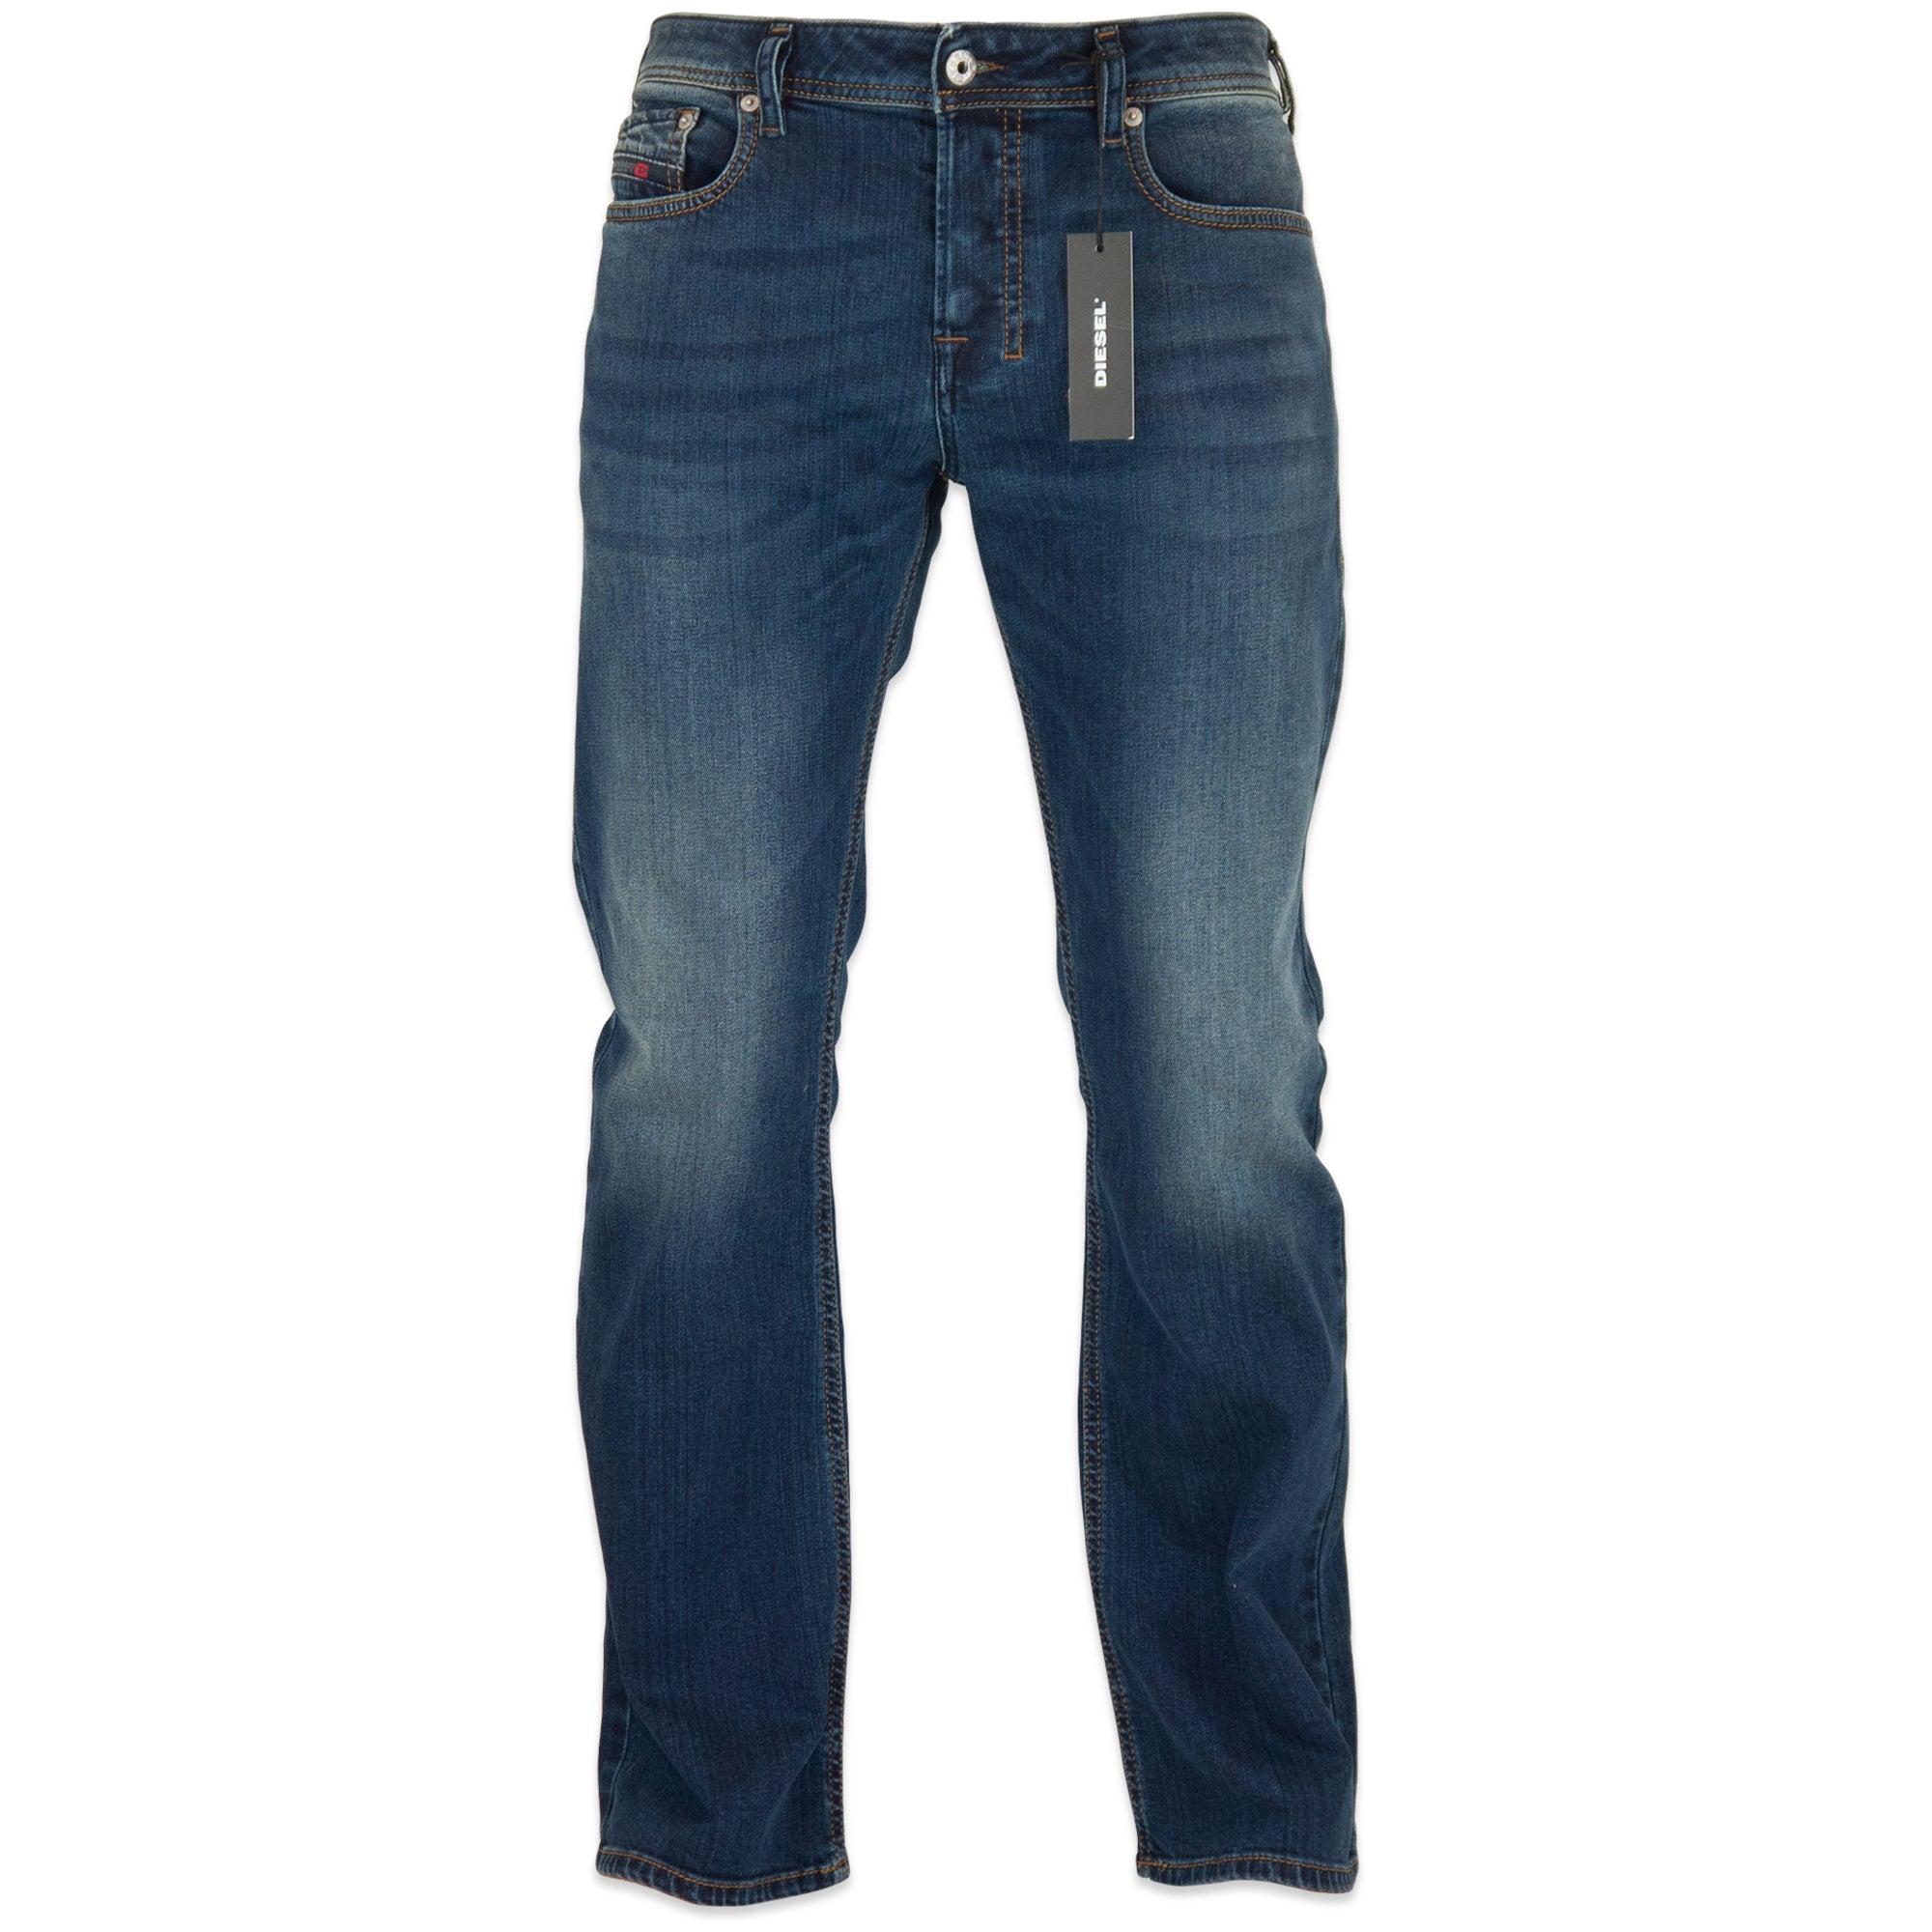 DIESEL Denim Zatiny 84 Bu Bootcut Jeans Dark Blue for Men - Lyst